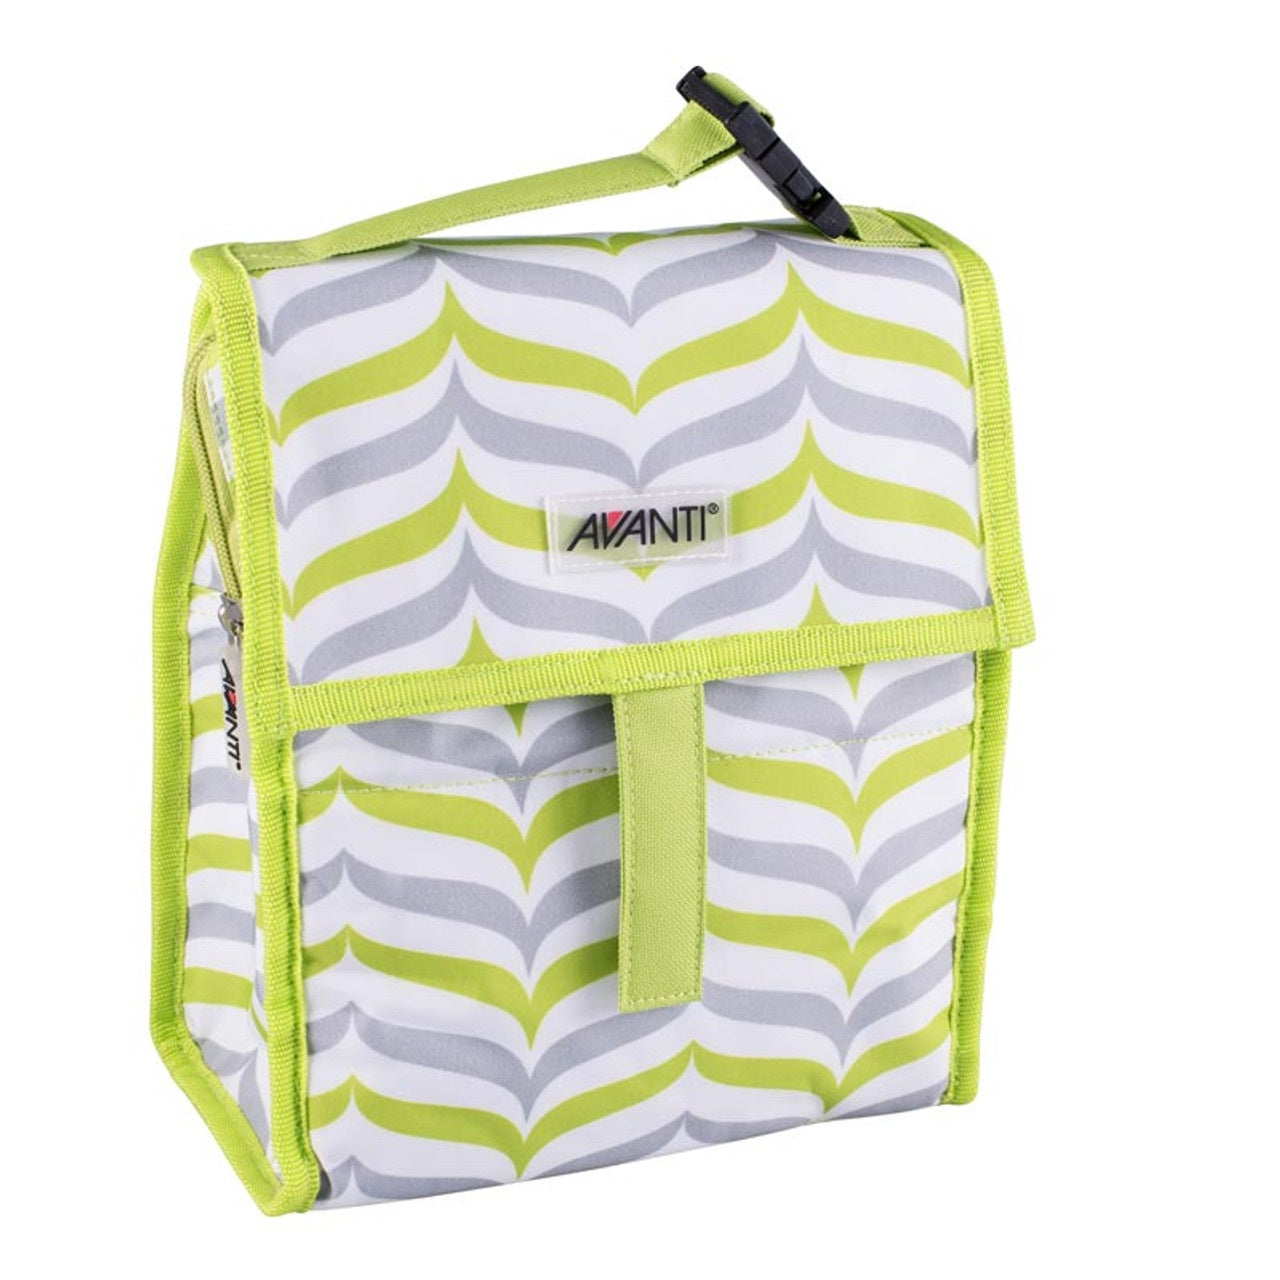 Avanti Yum Yum Lunch Cooler Bag With Gei Ice Brick - Geo Wave - 21.5 x 12 x 26cm - Green/Grey